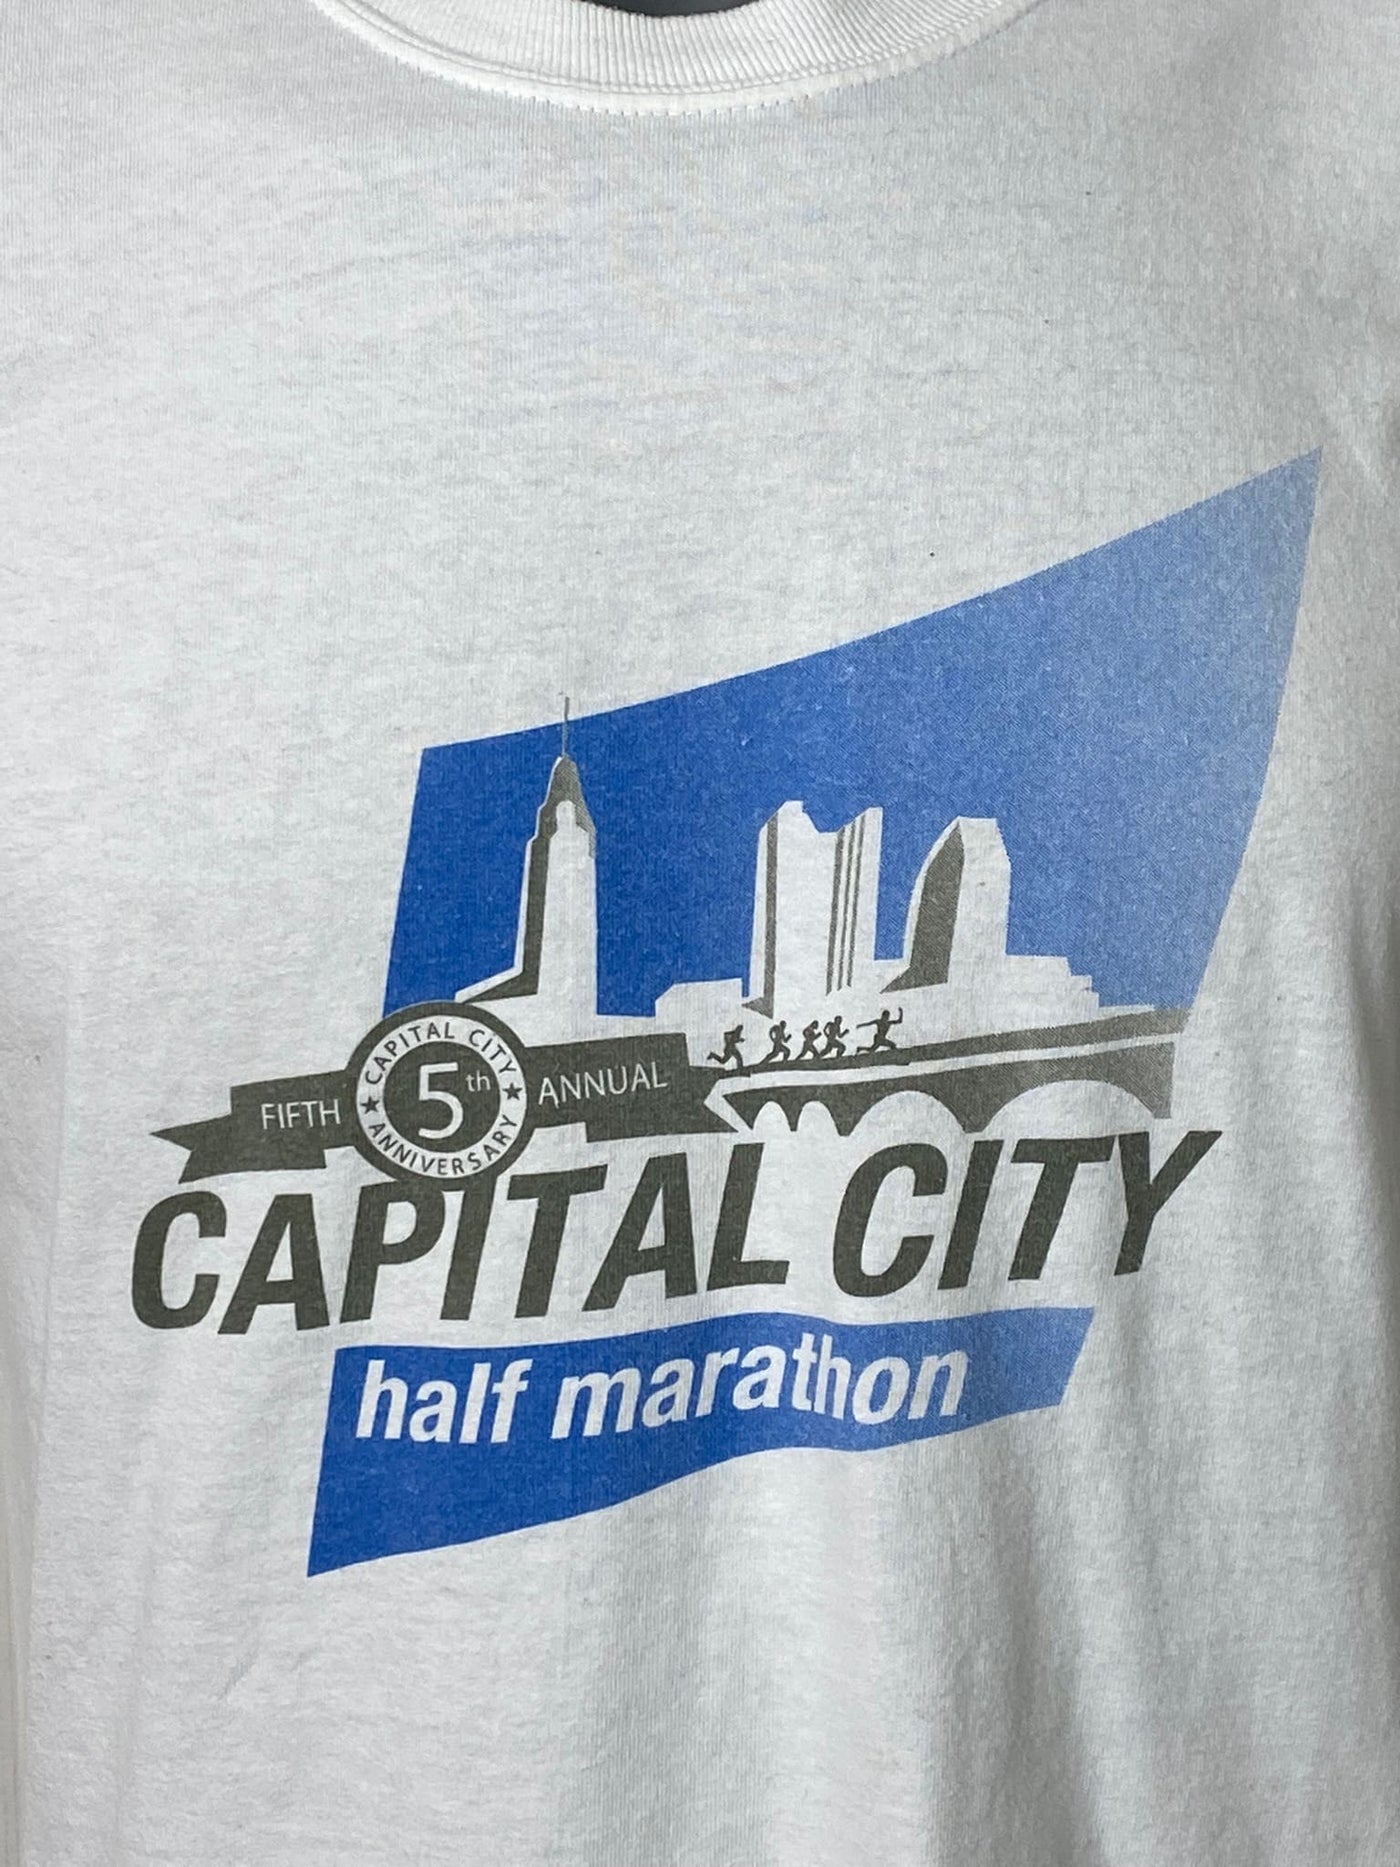 USA Marathon Finisher Shirt " Capital City 2009" Gr. M